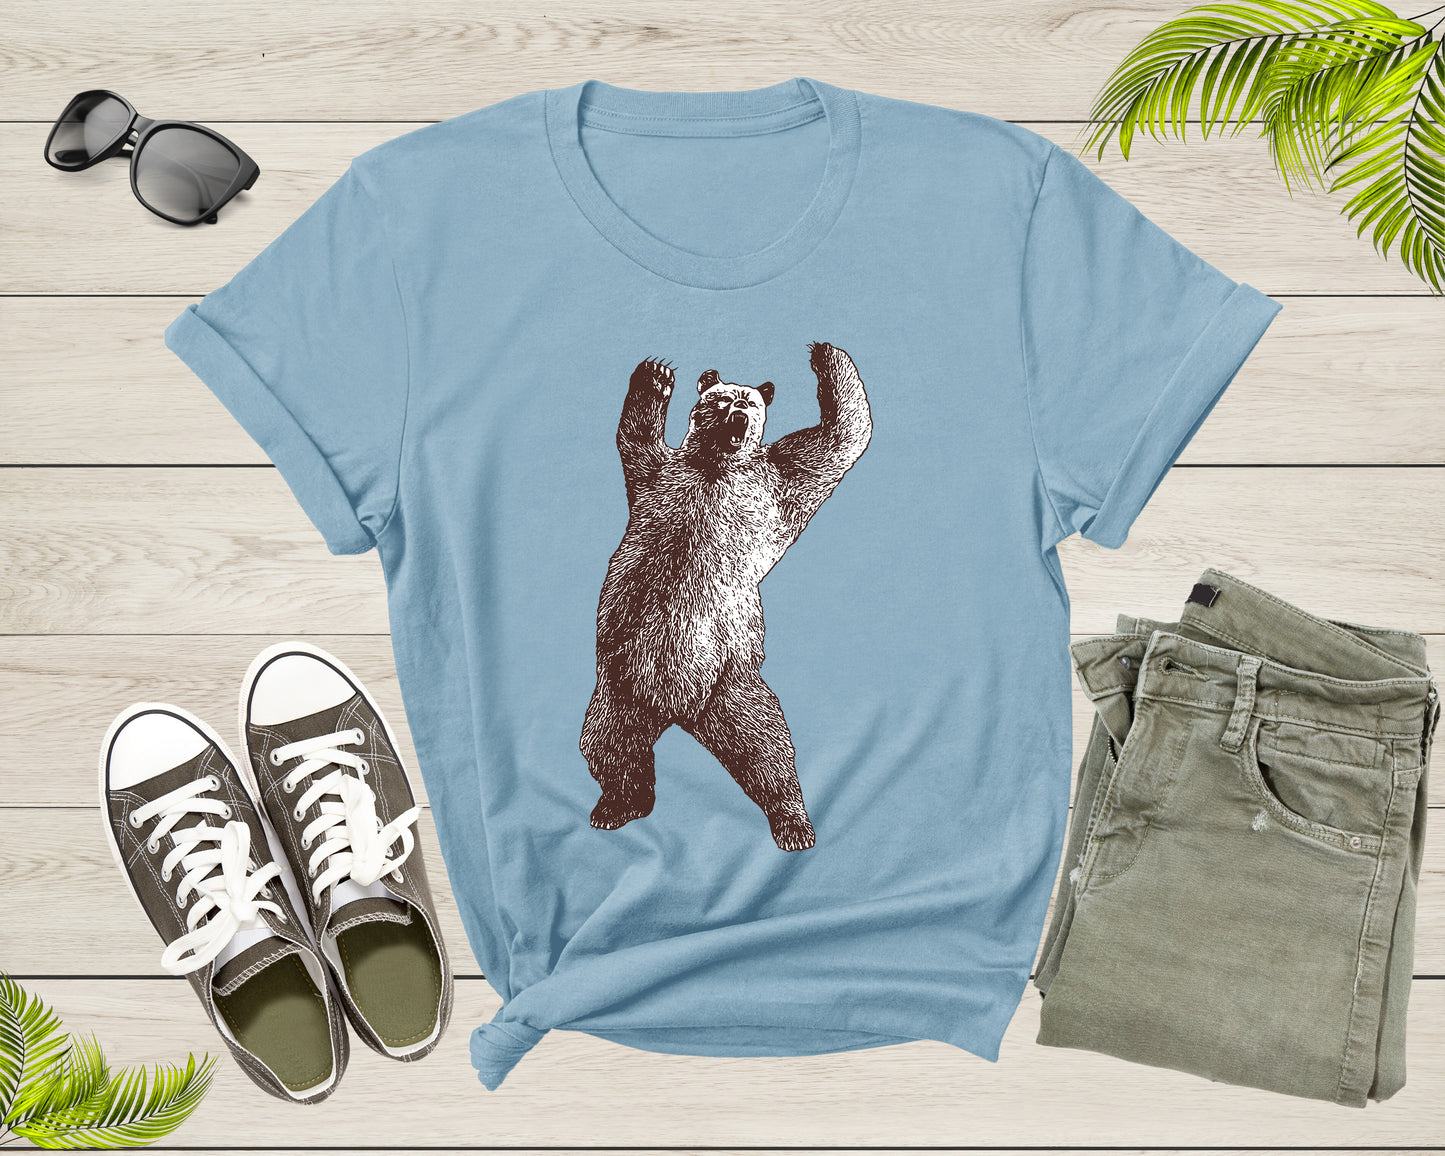 Roaring Grizzly Brown Bear Standing on Feet Cool Giant Bear T-Shirt Cool Bear Lover Gift T Shirt for Men Women Kids Boys Girls Tshirt